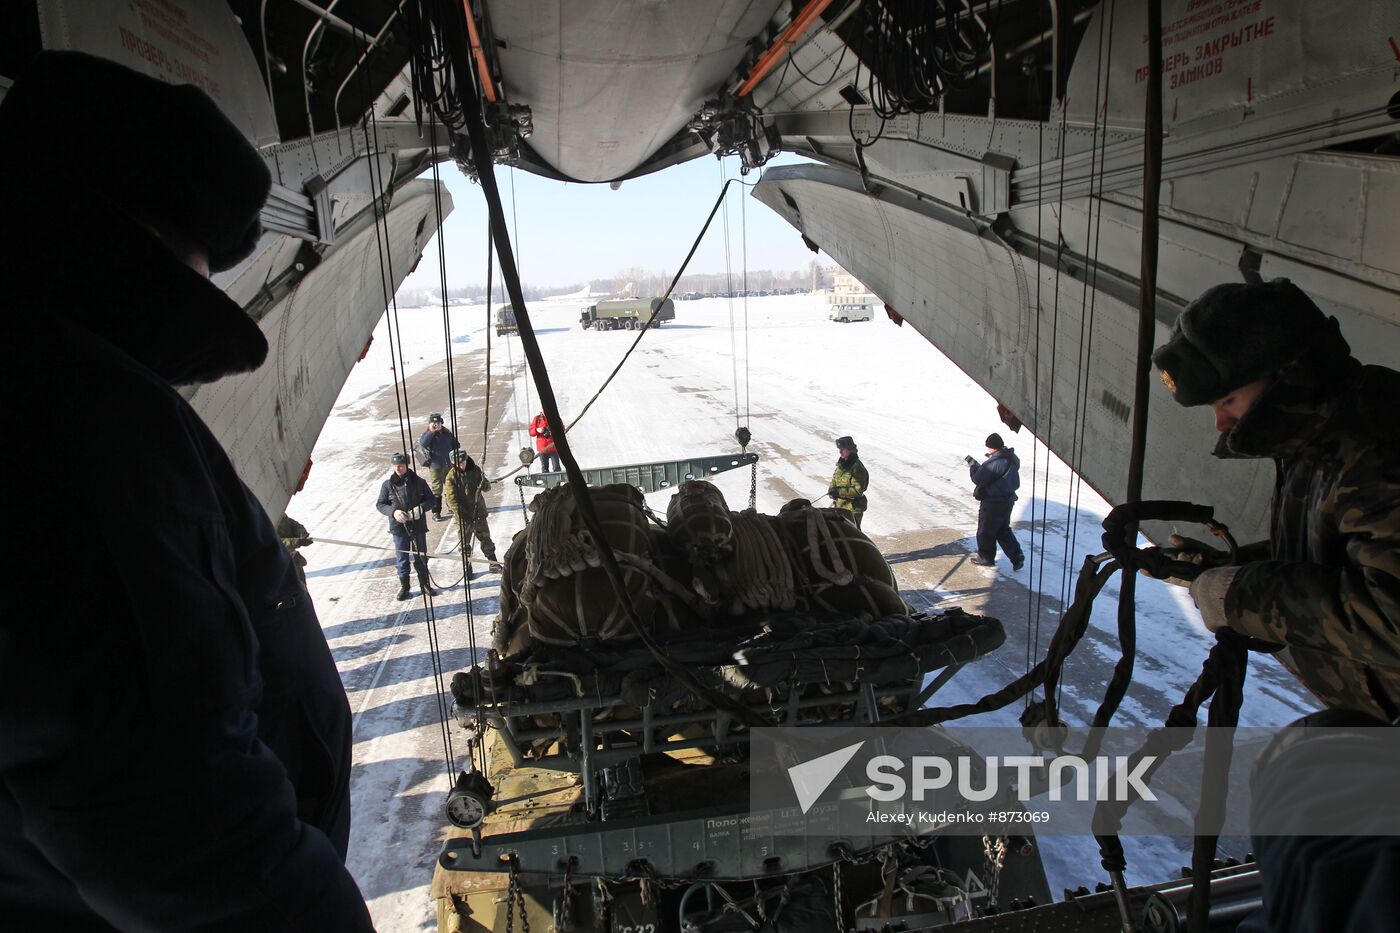 Drills for airborne troops in Ryazan Region